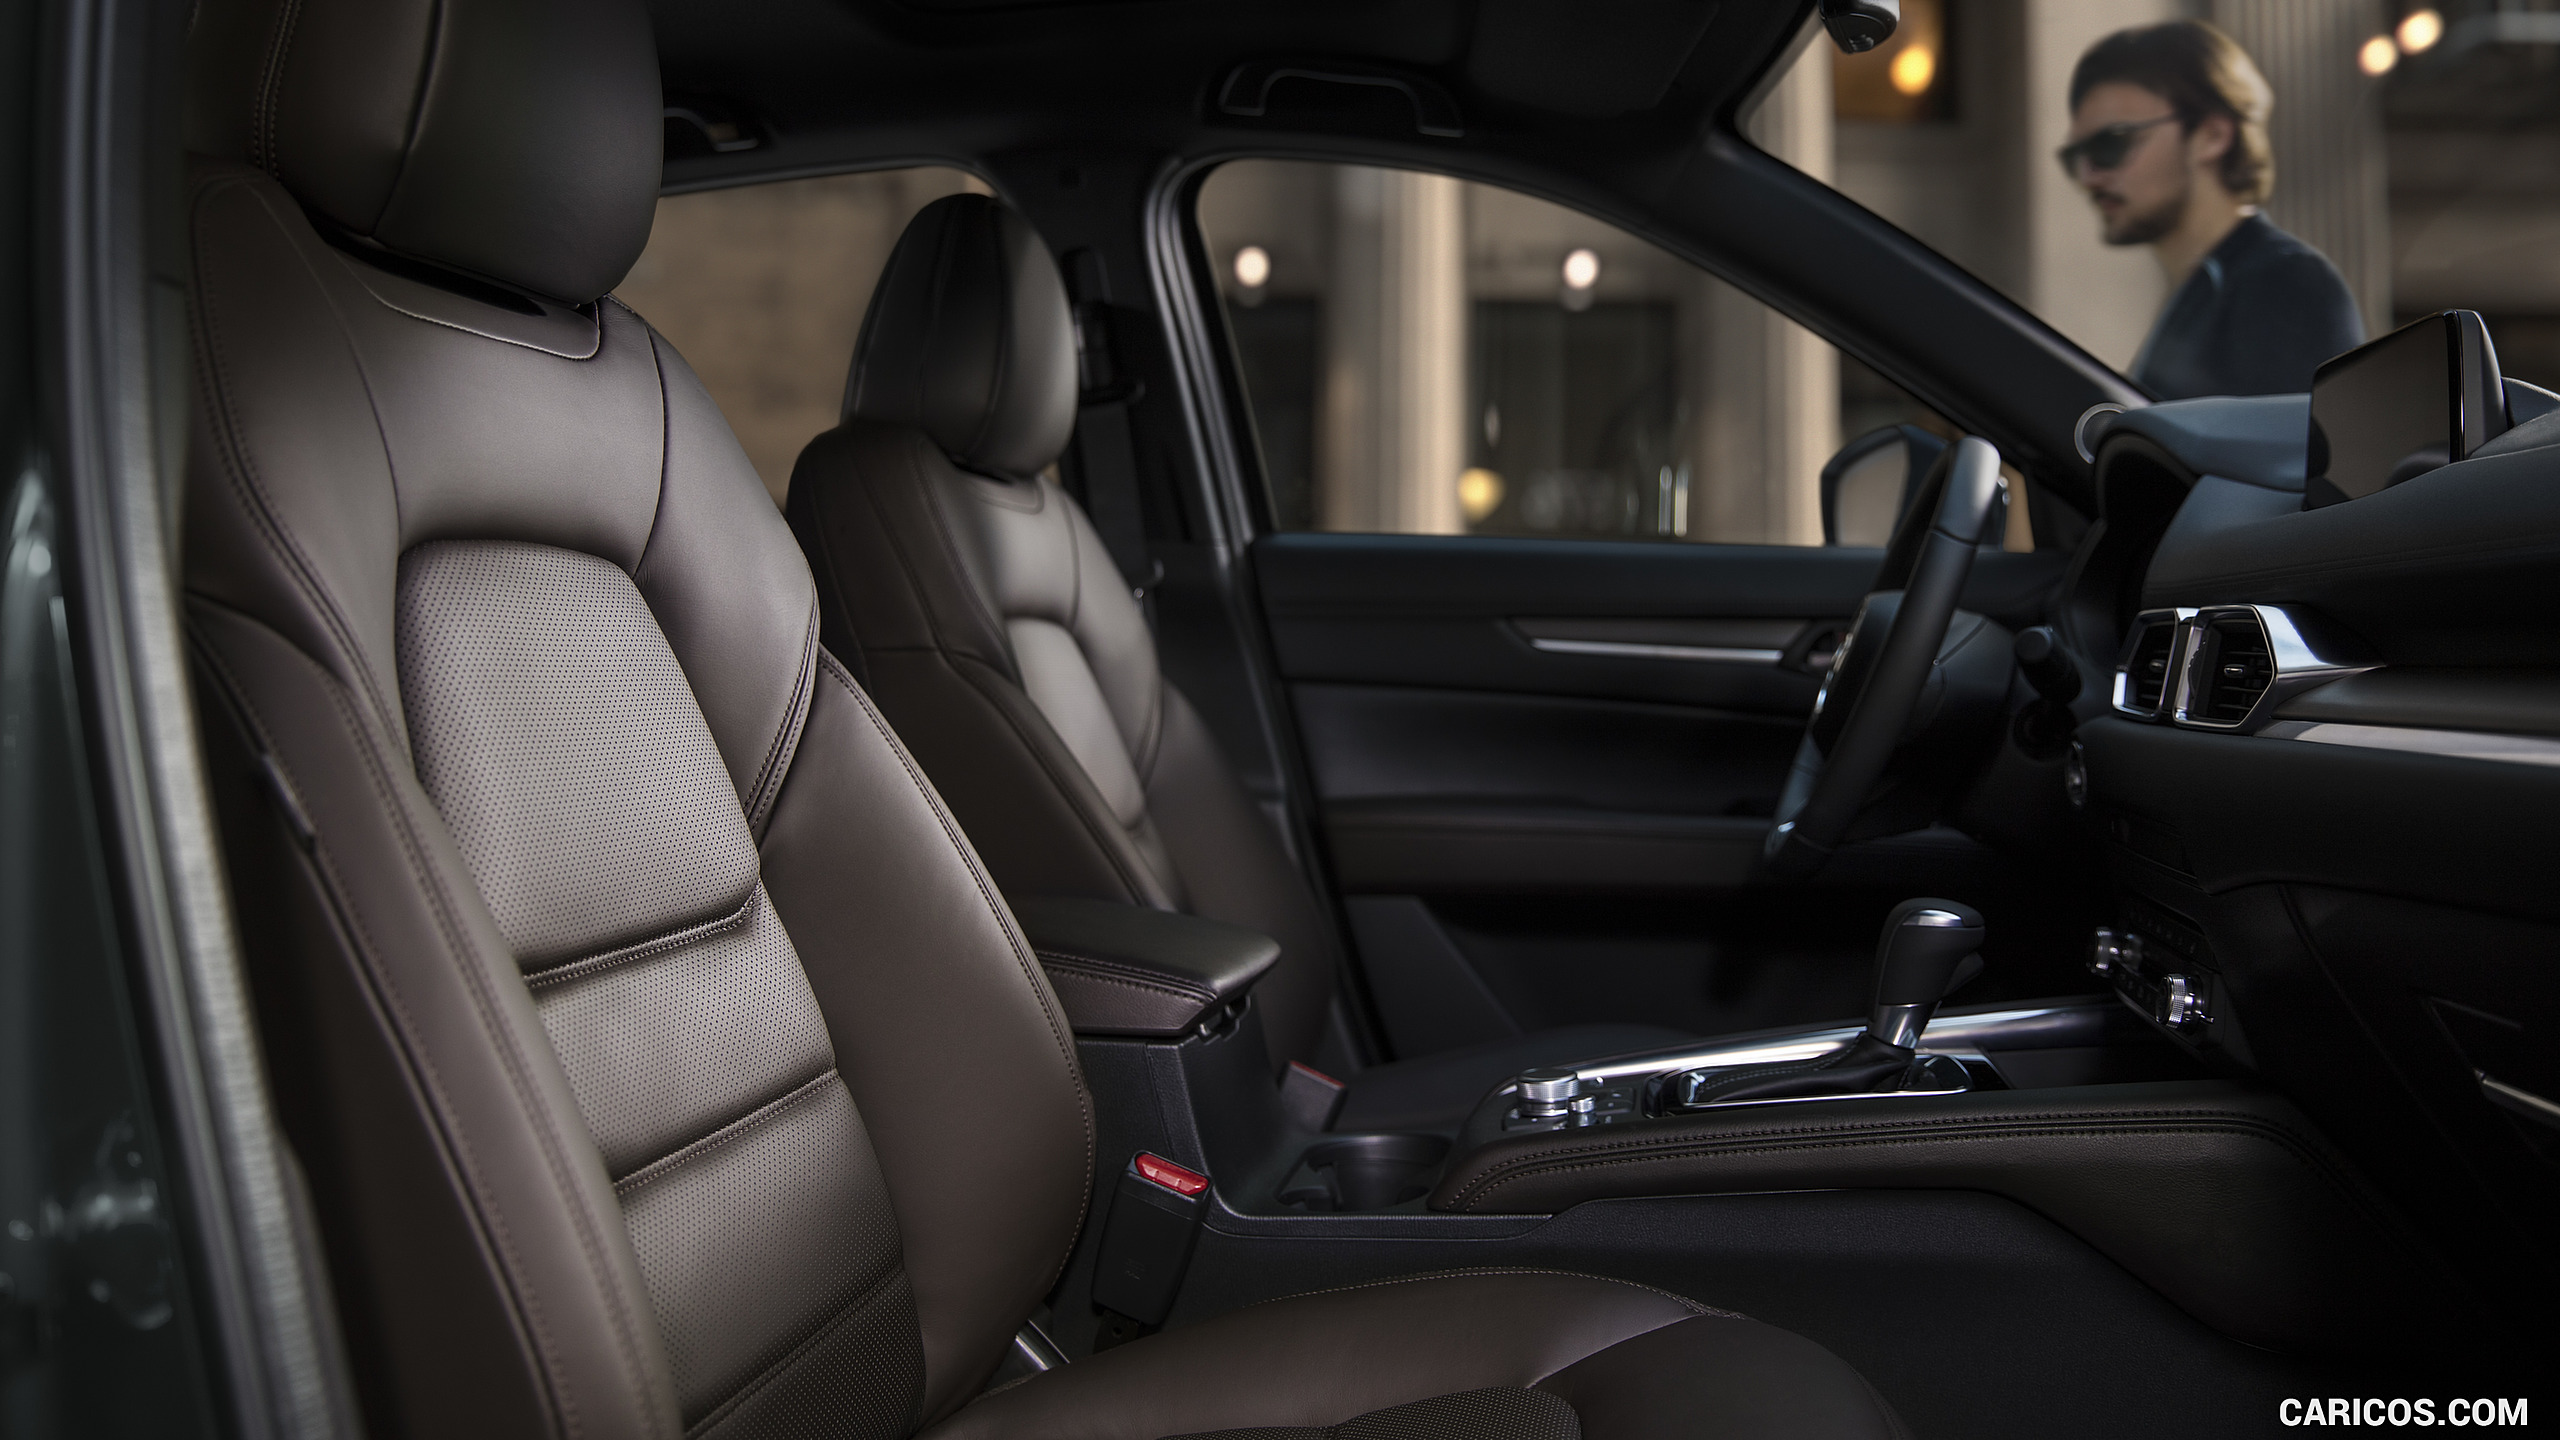 2019 Mazda CX-5 Signature - Interior, Seats, #5 of 5